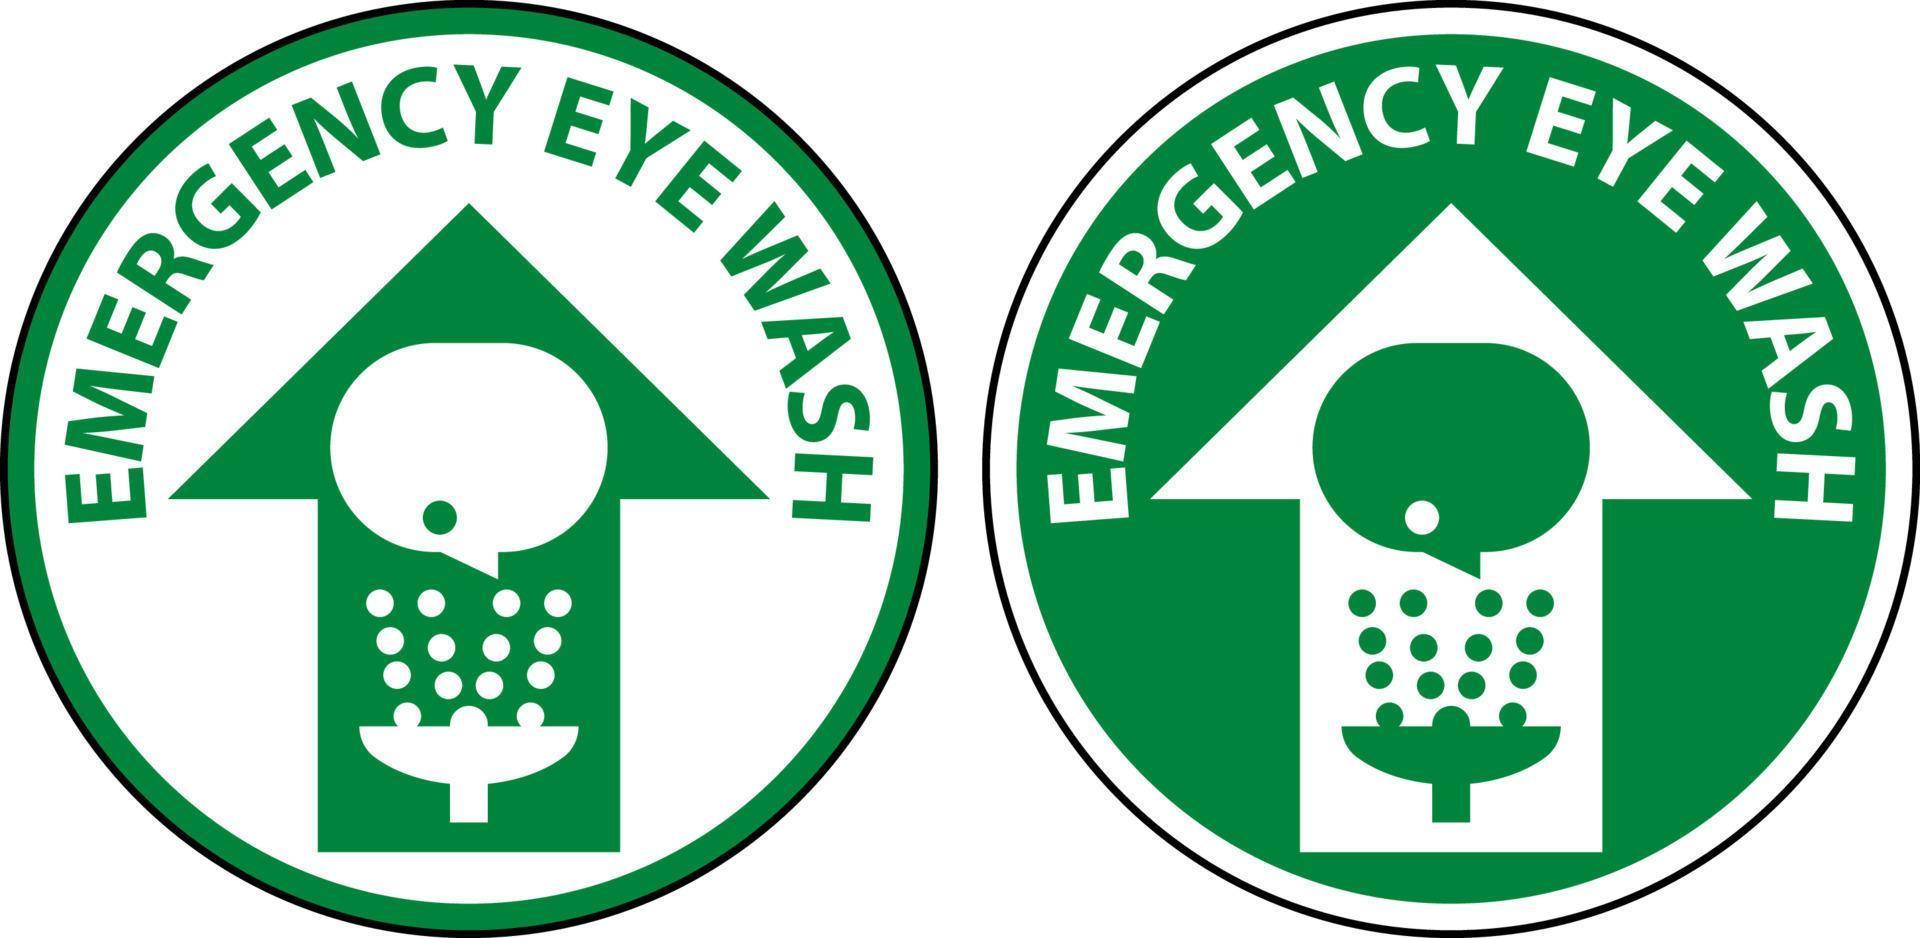 Emergency Eye Wash Floor Sign On White Background vector